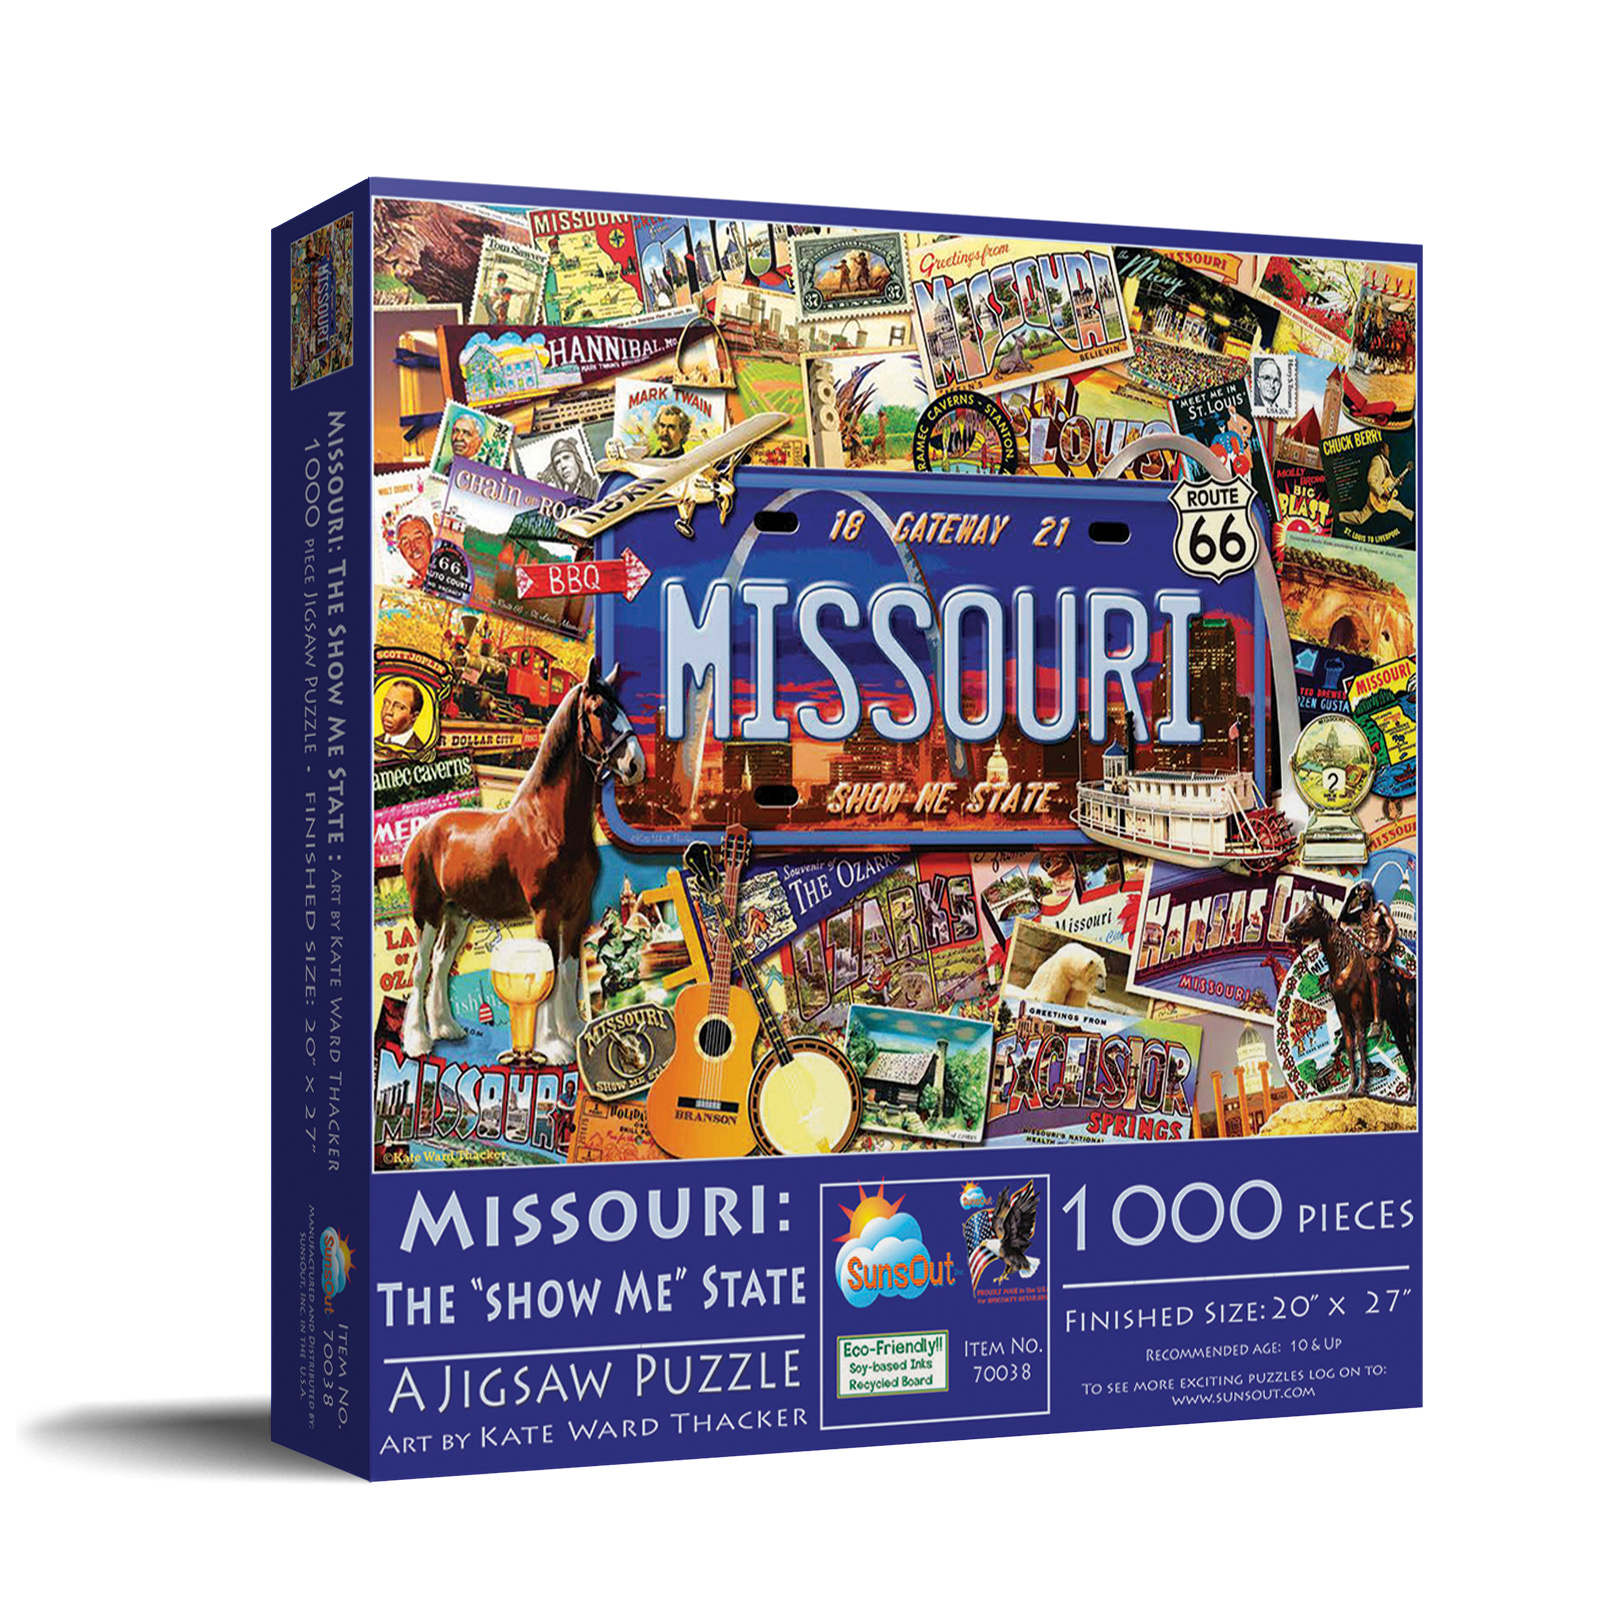 Missouri: The "Show Me" State